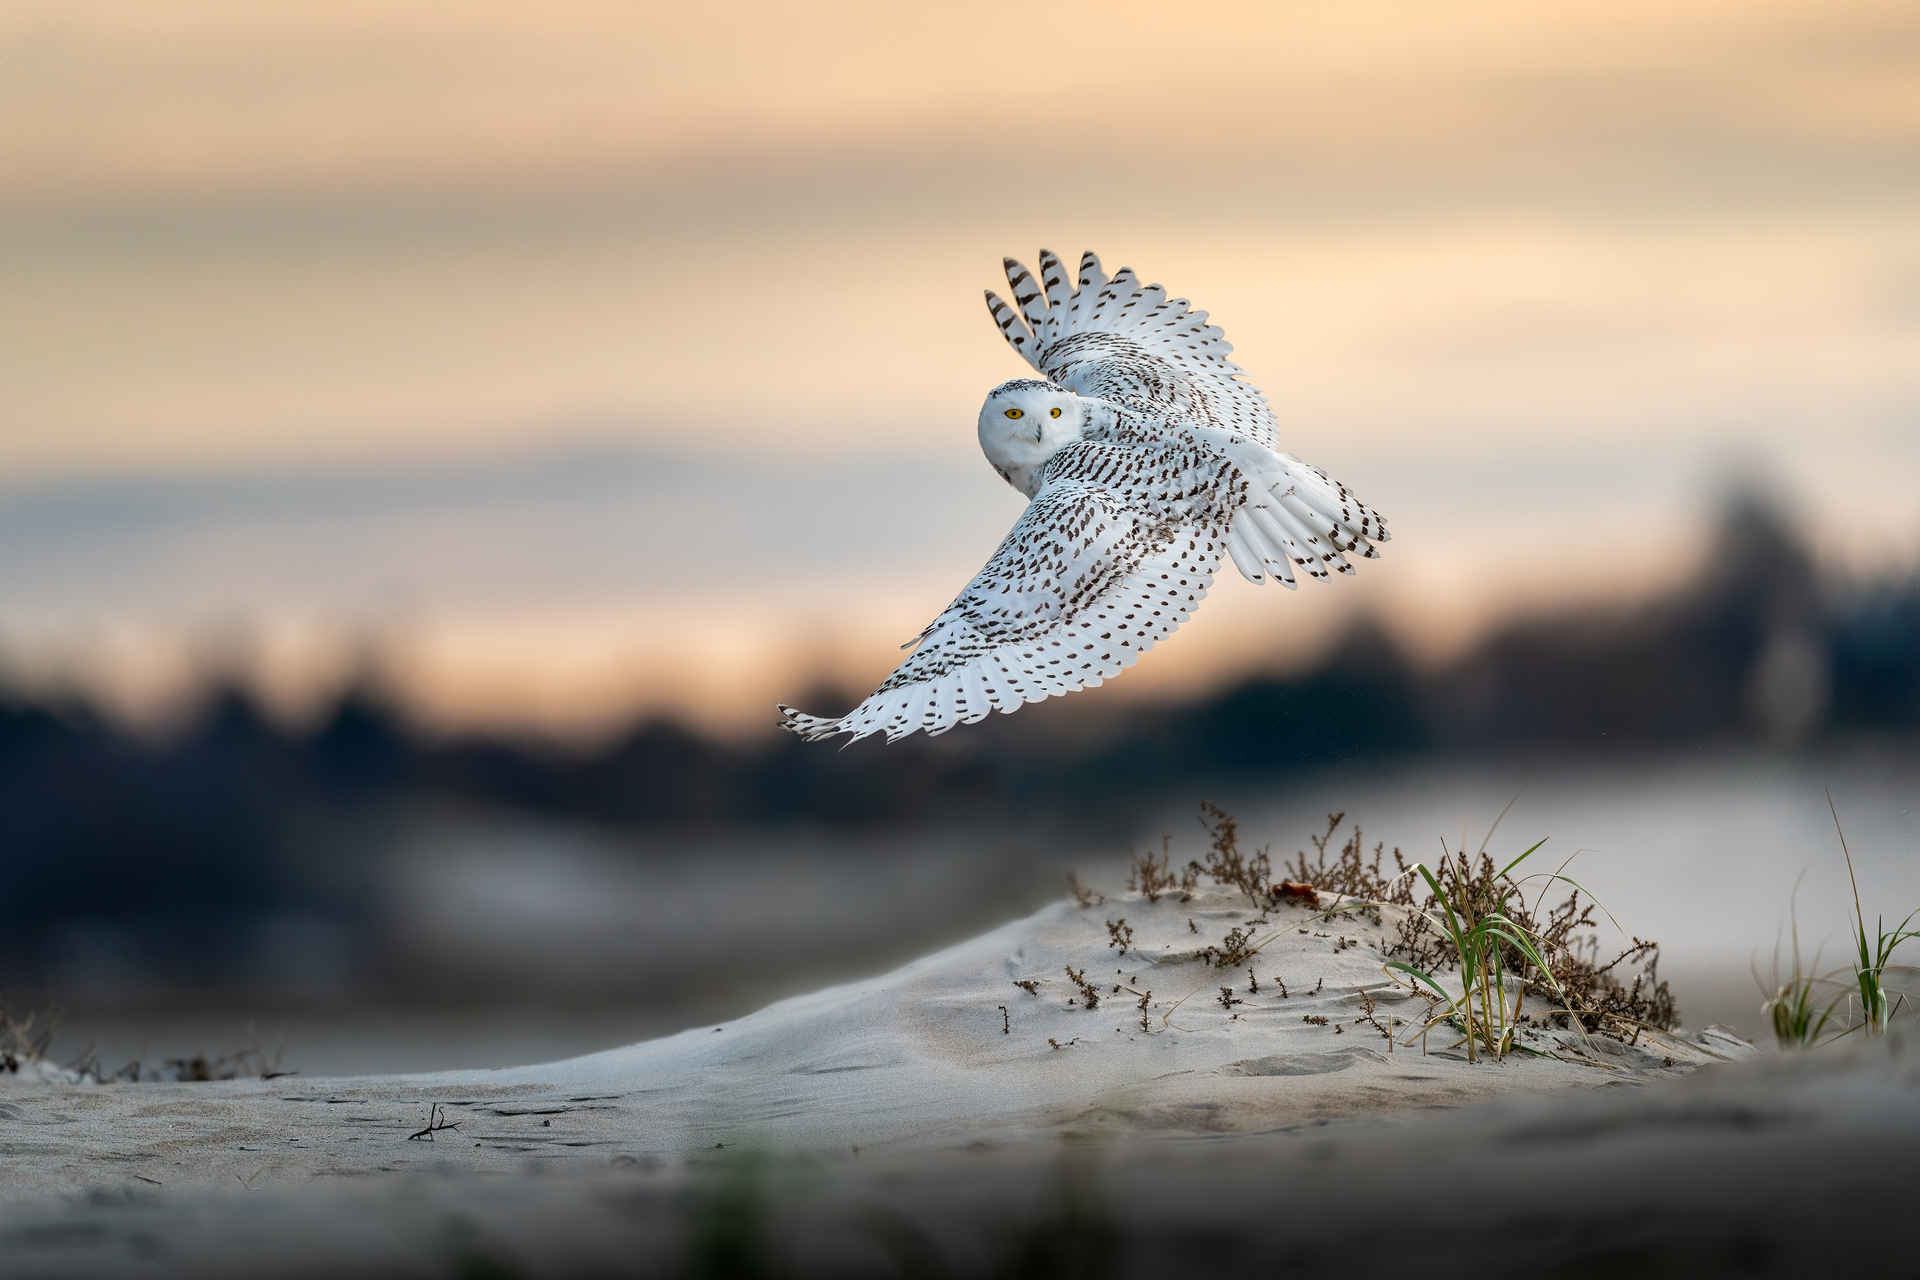 Snowy Owl in flight over a dune